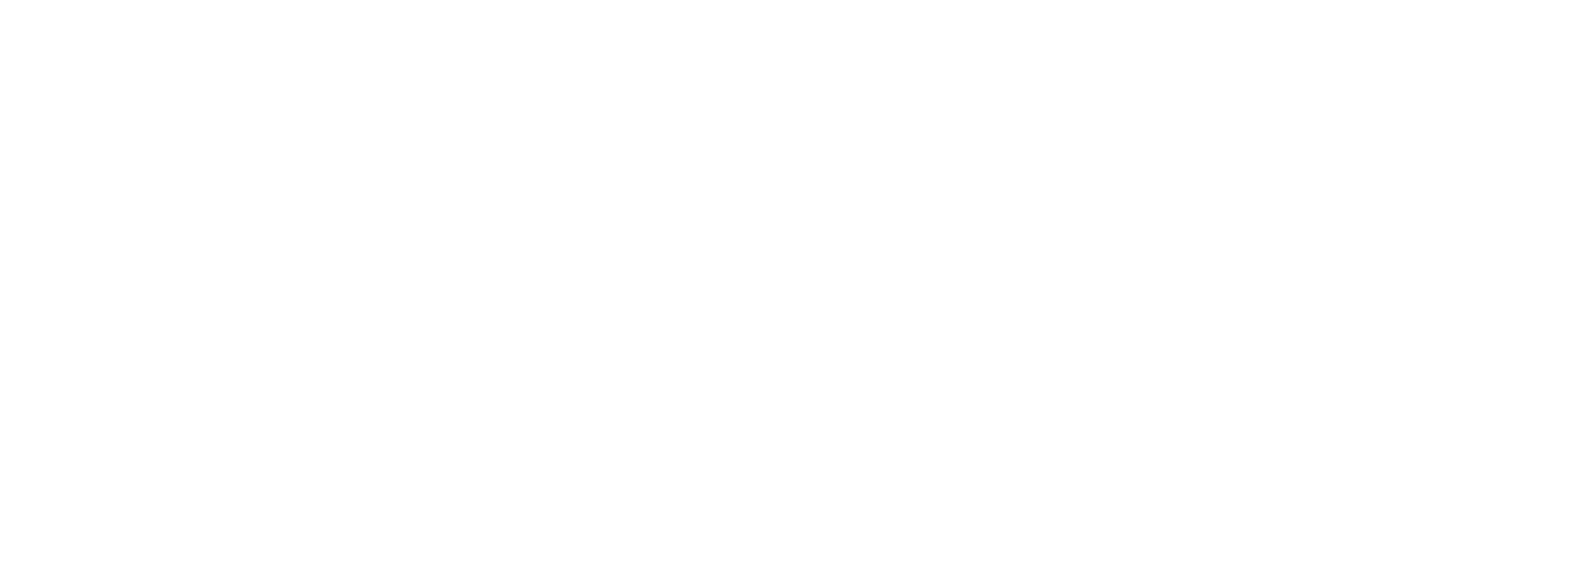 Jerónimo Martins
 Logo groß für dunkle Hintergründe (transparentes PNG)